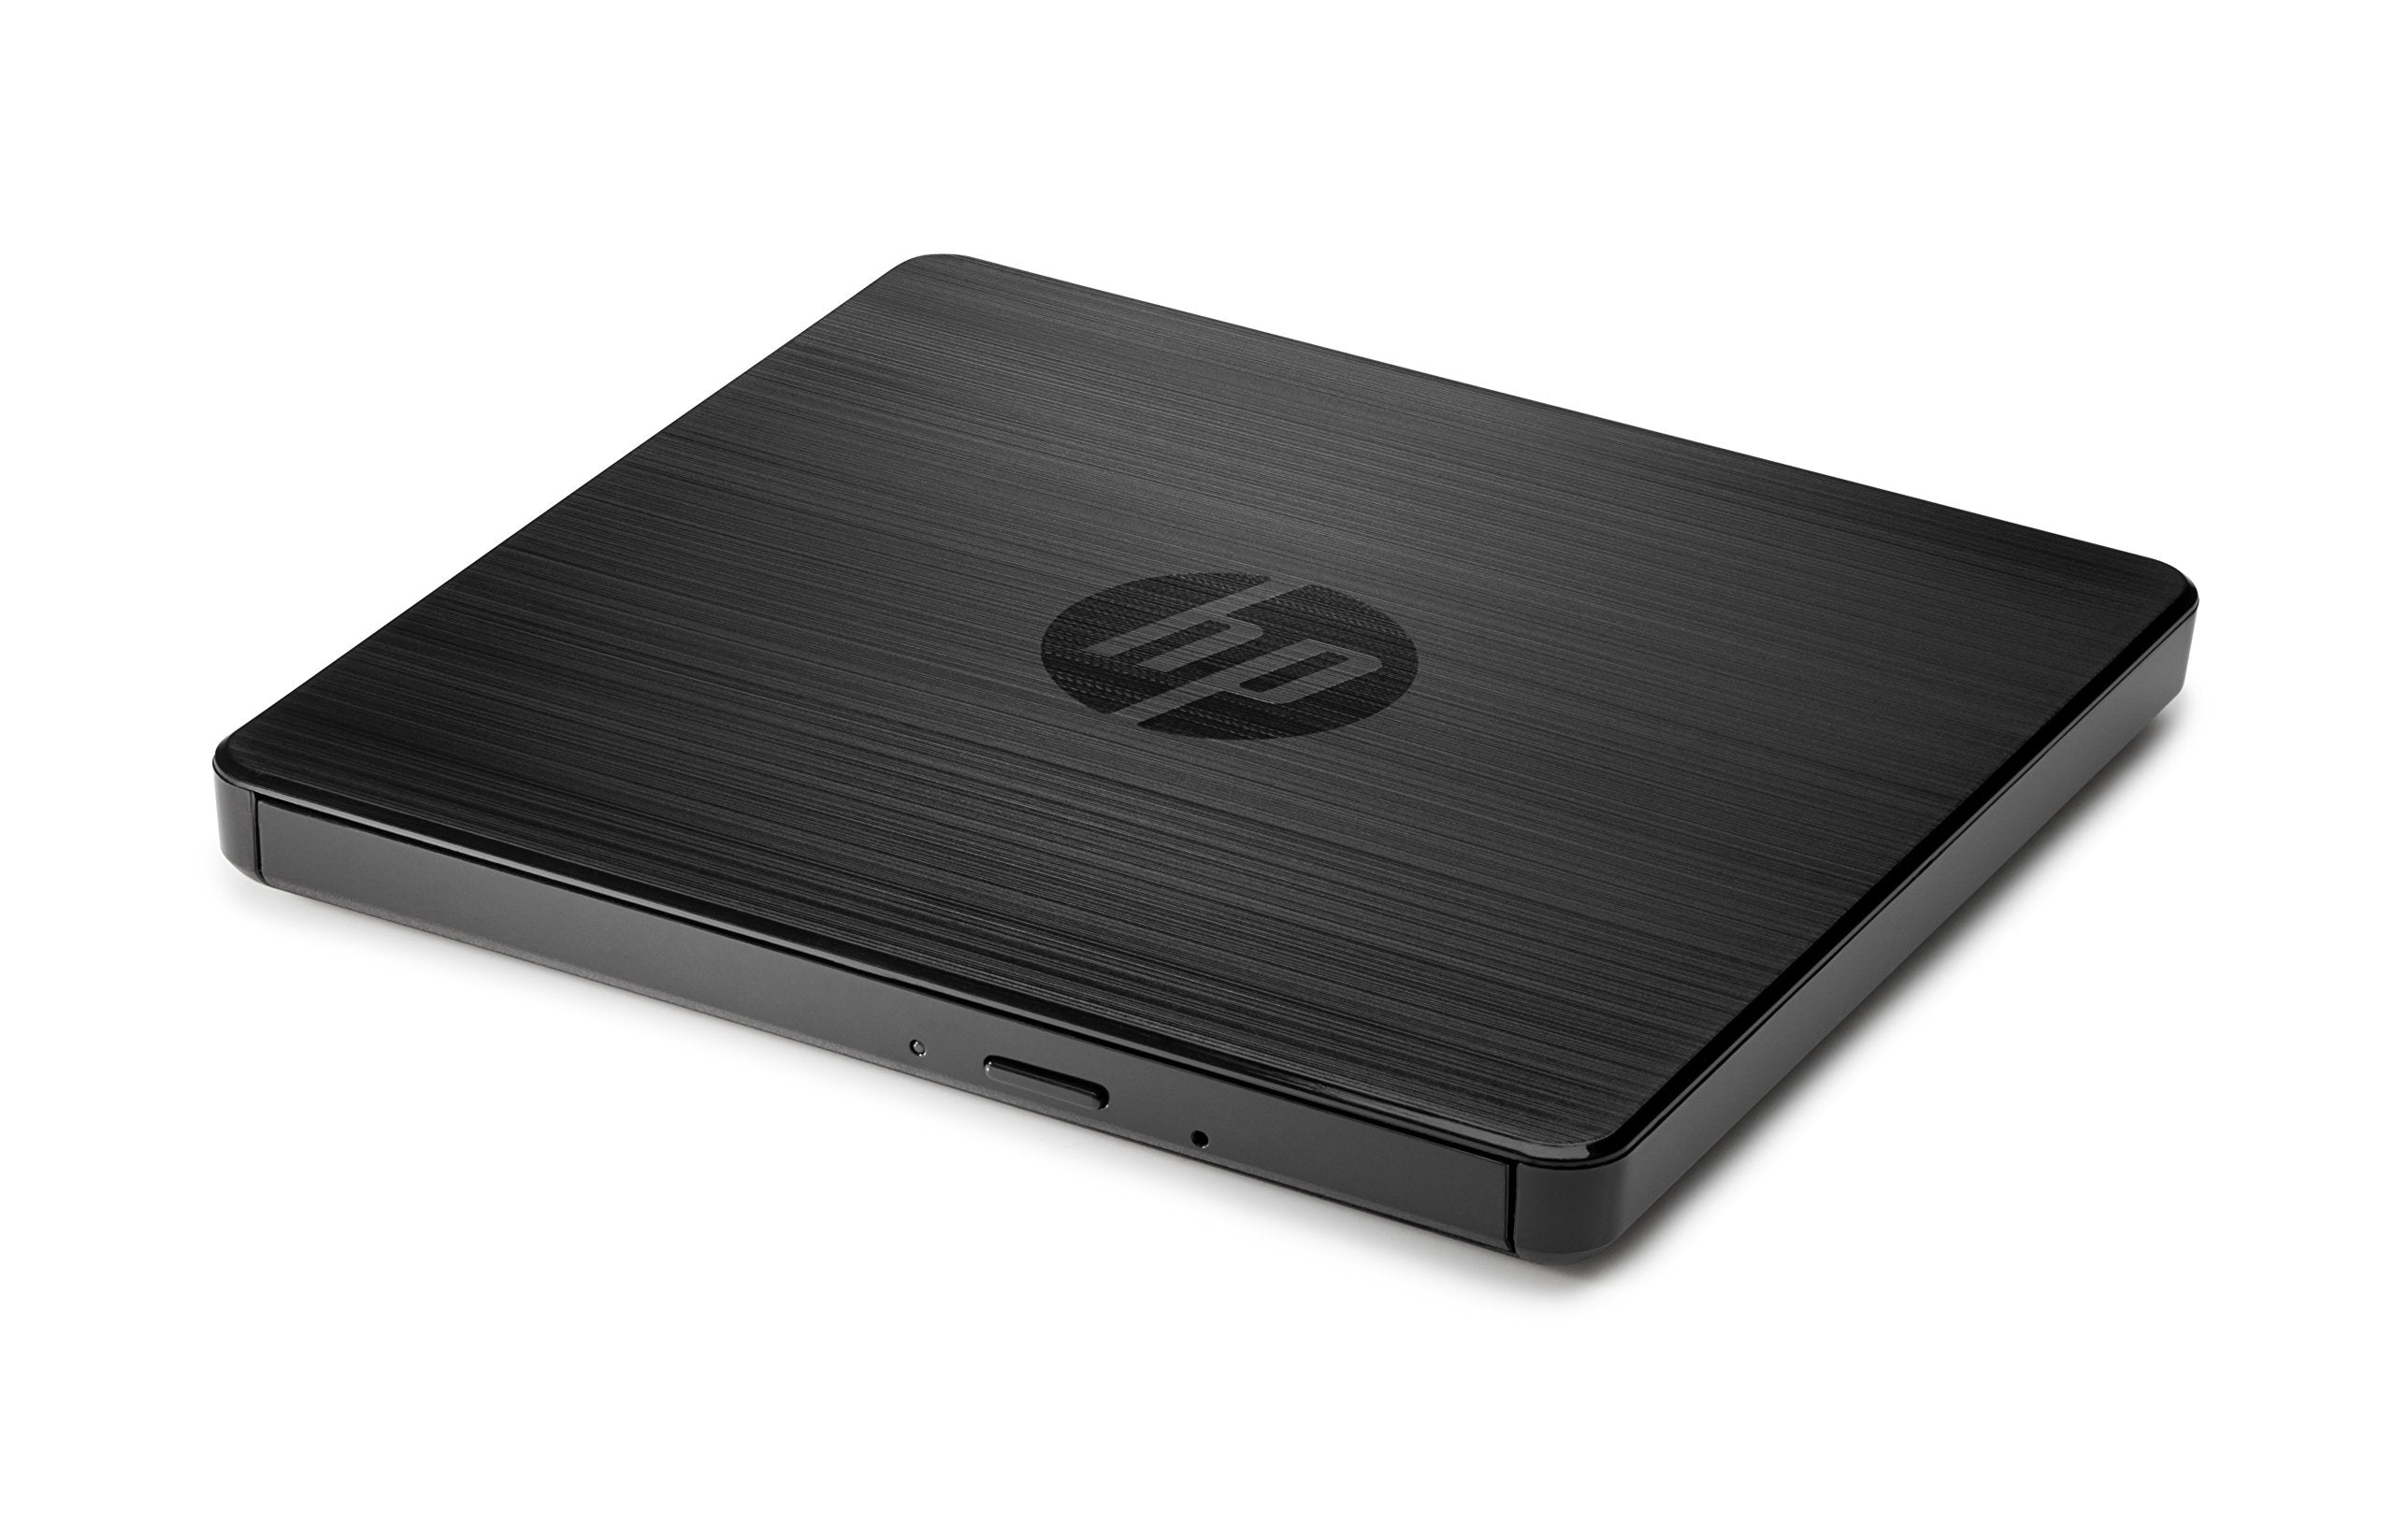 HP External USB DVDRW Drive - optical disc drives (Notebook, DVD±RW, Black, USB 2.0)